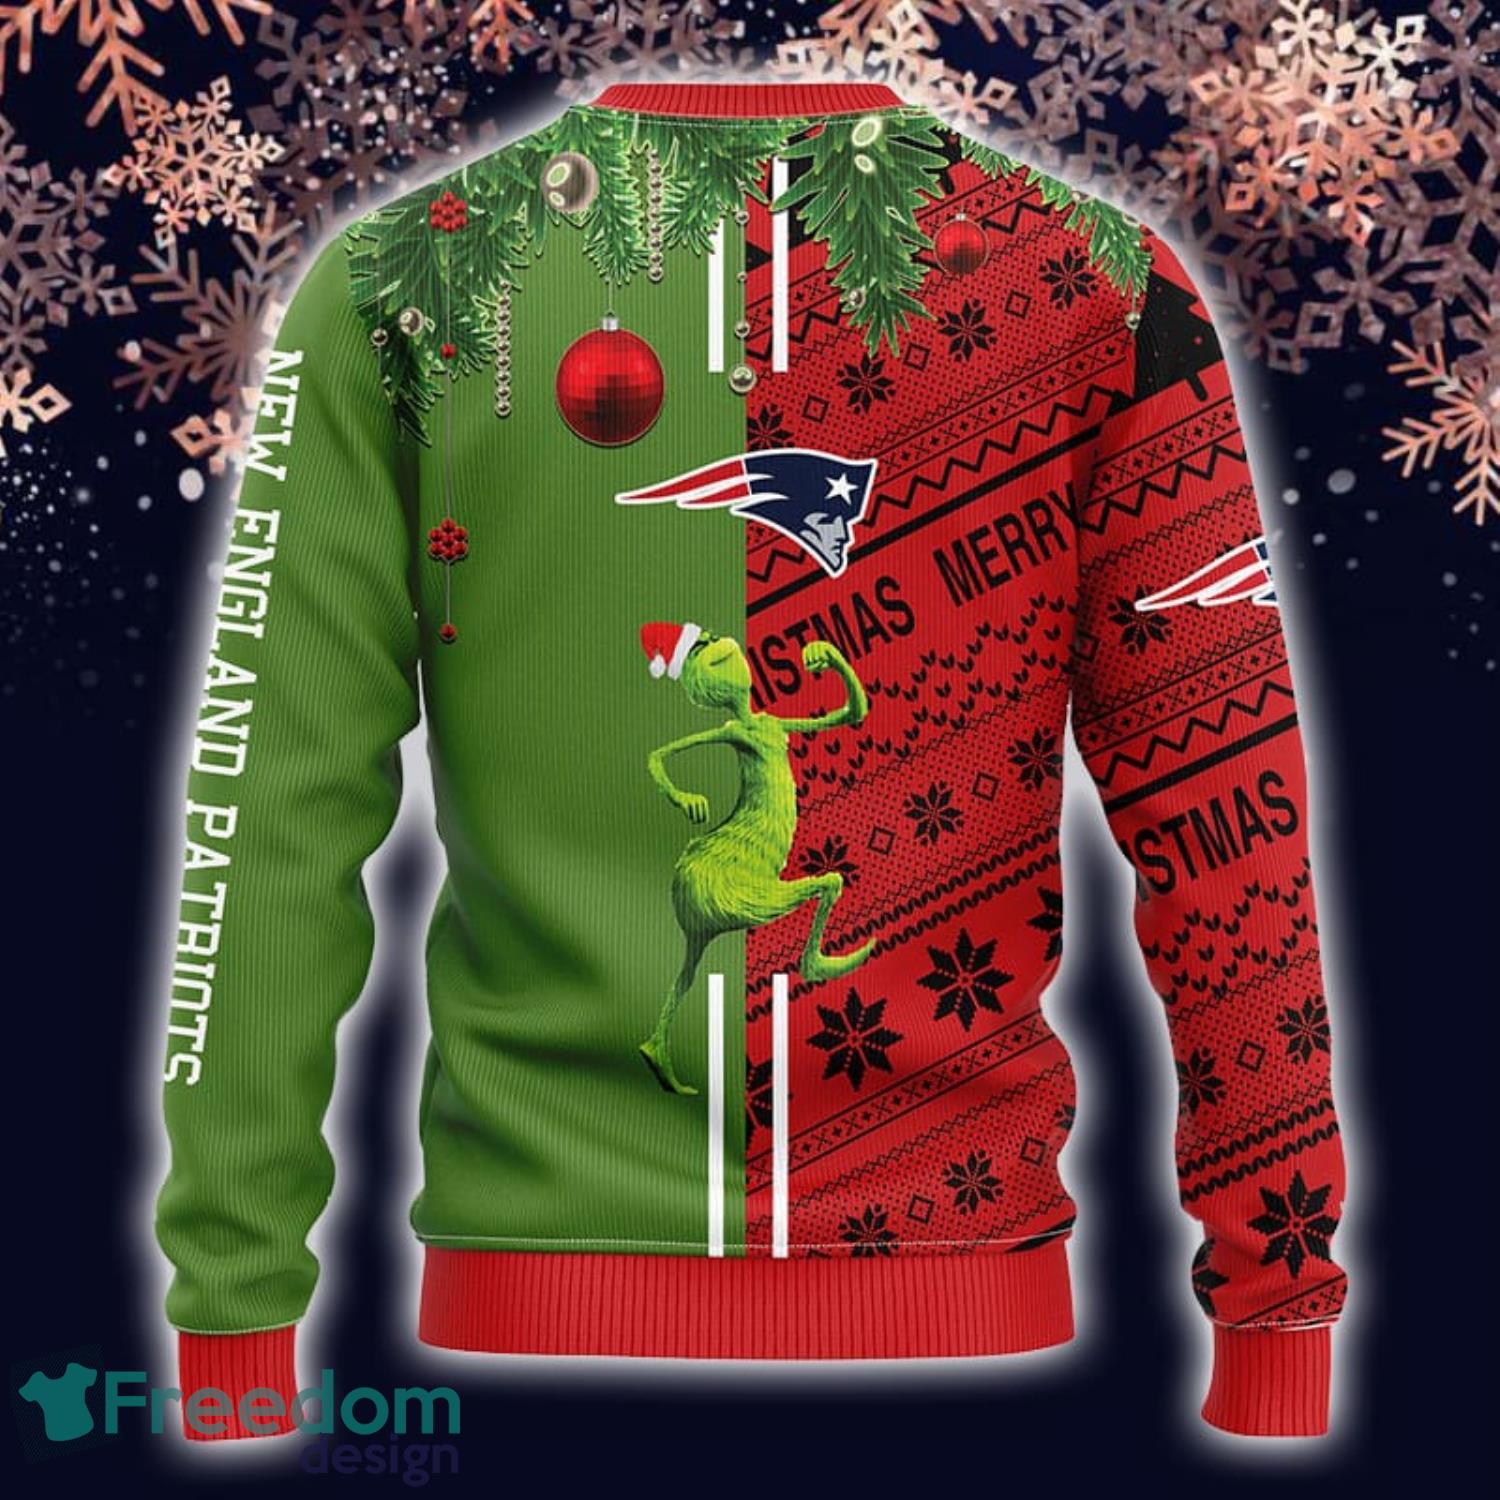 patriots christmas sweater